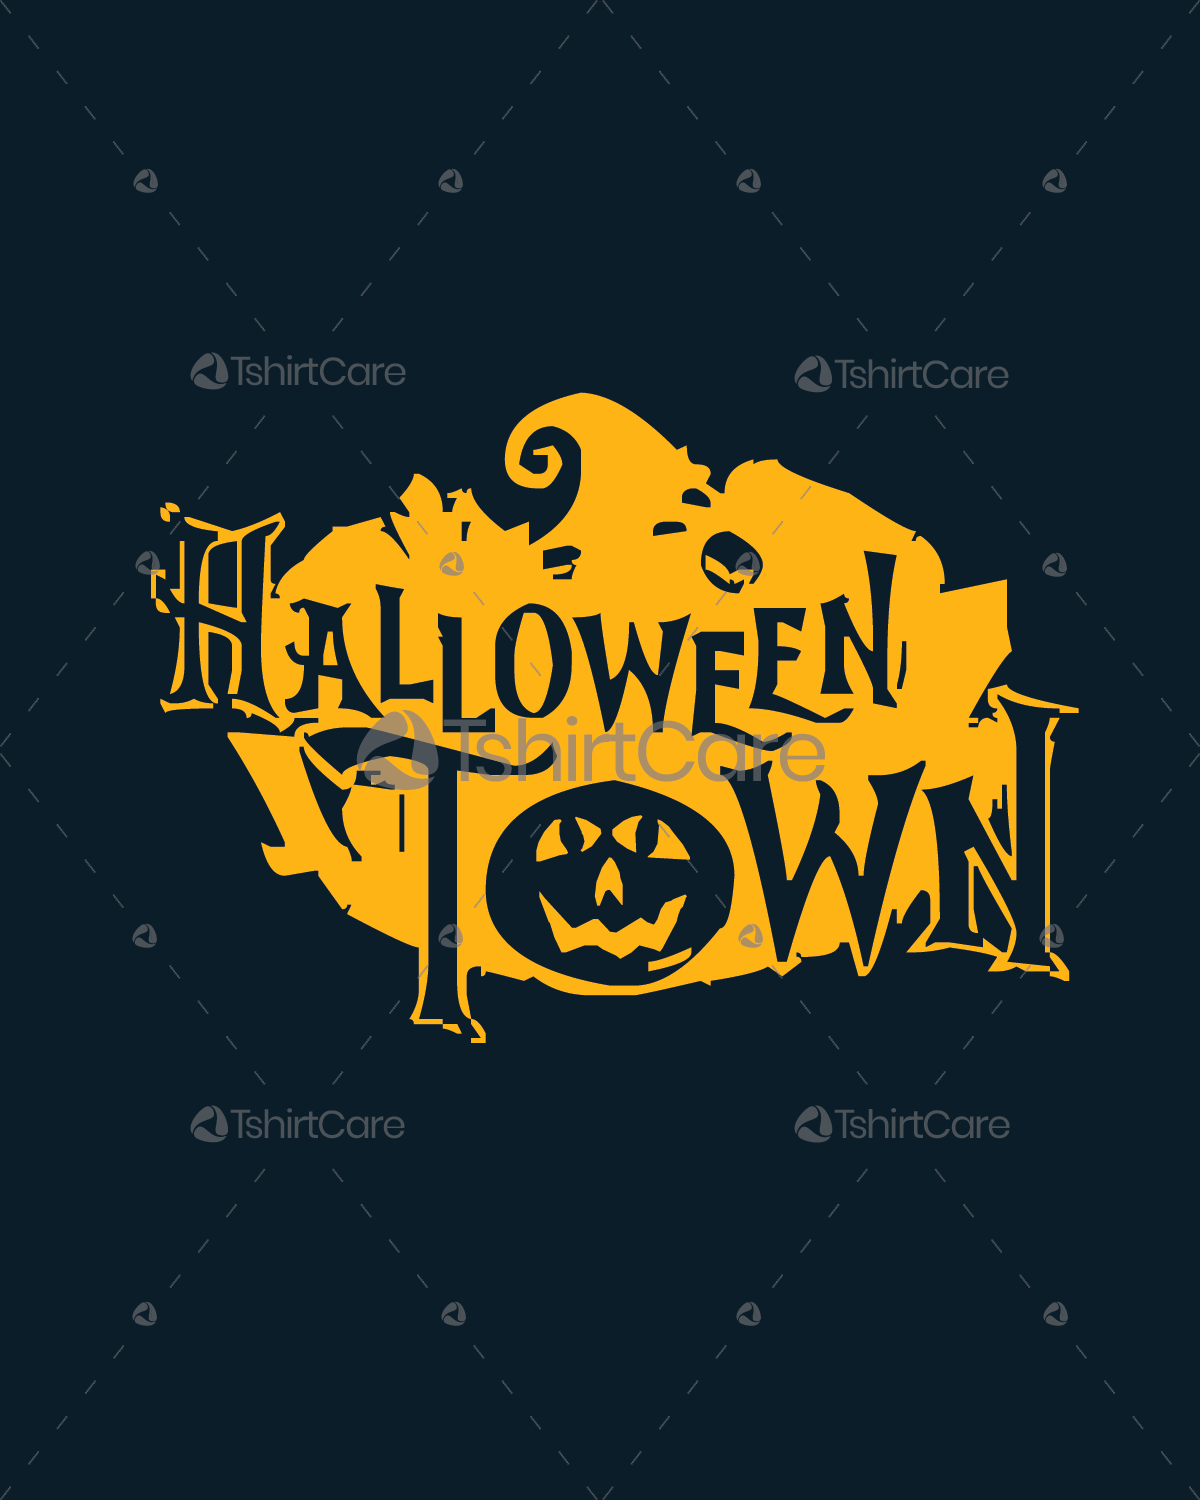 Halloweentown Logo - Halloween town T shirt Design Happy Halloween Day Tee shirts for Men &  Women - TshirtCare